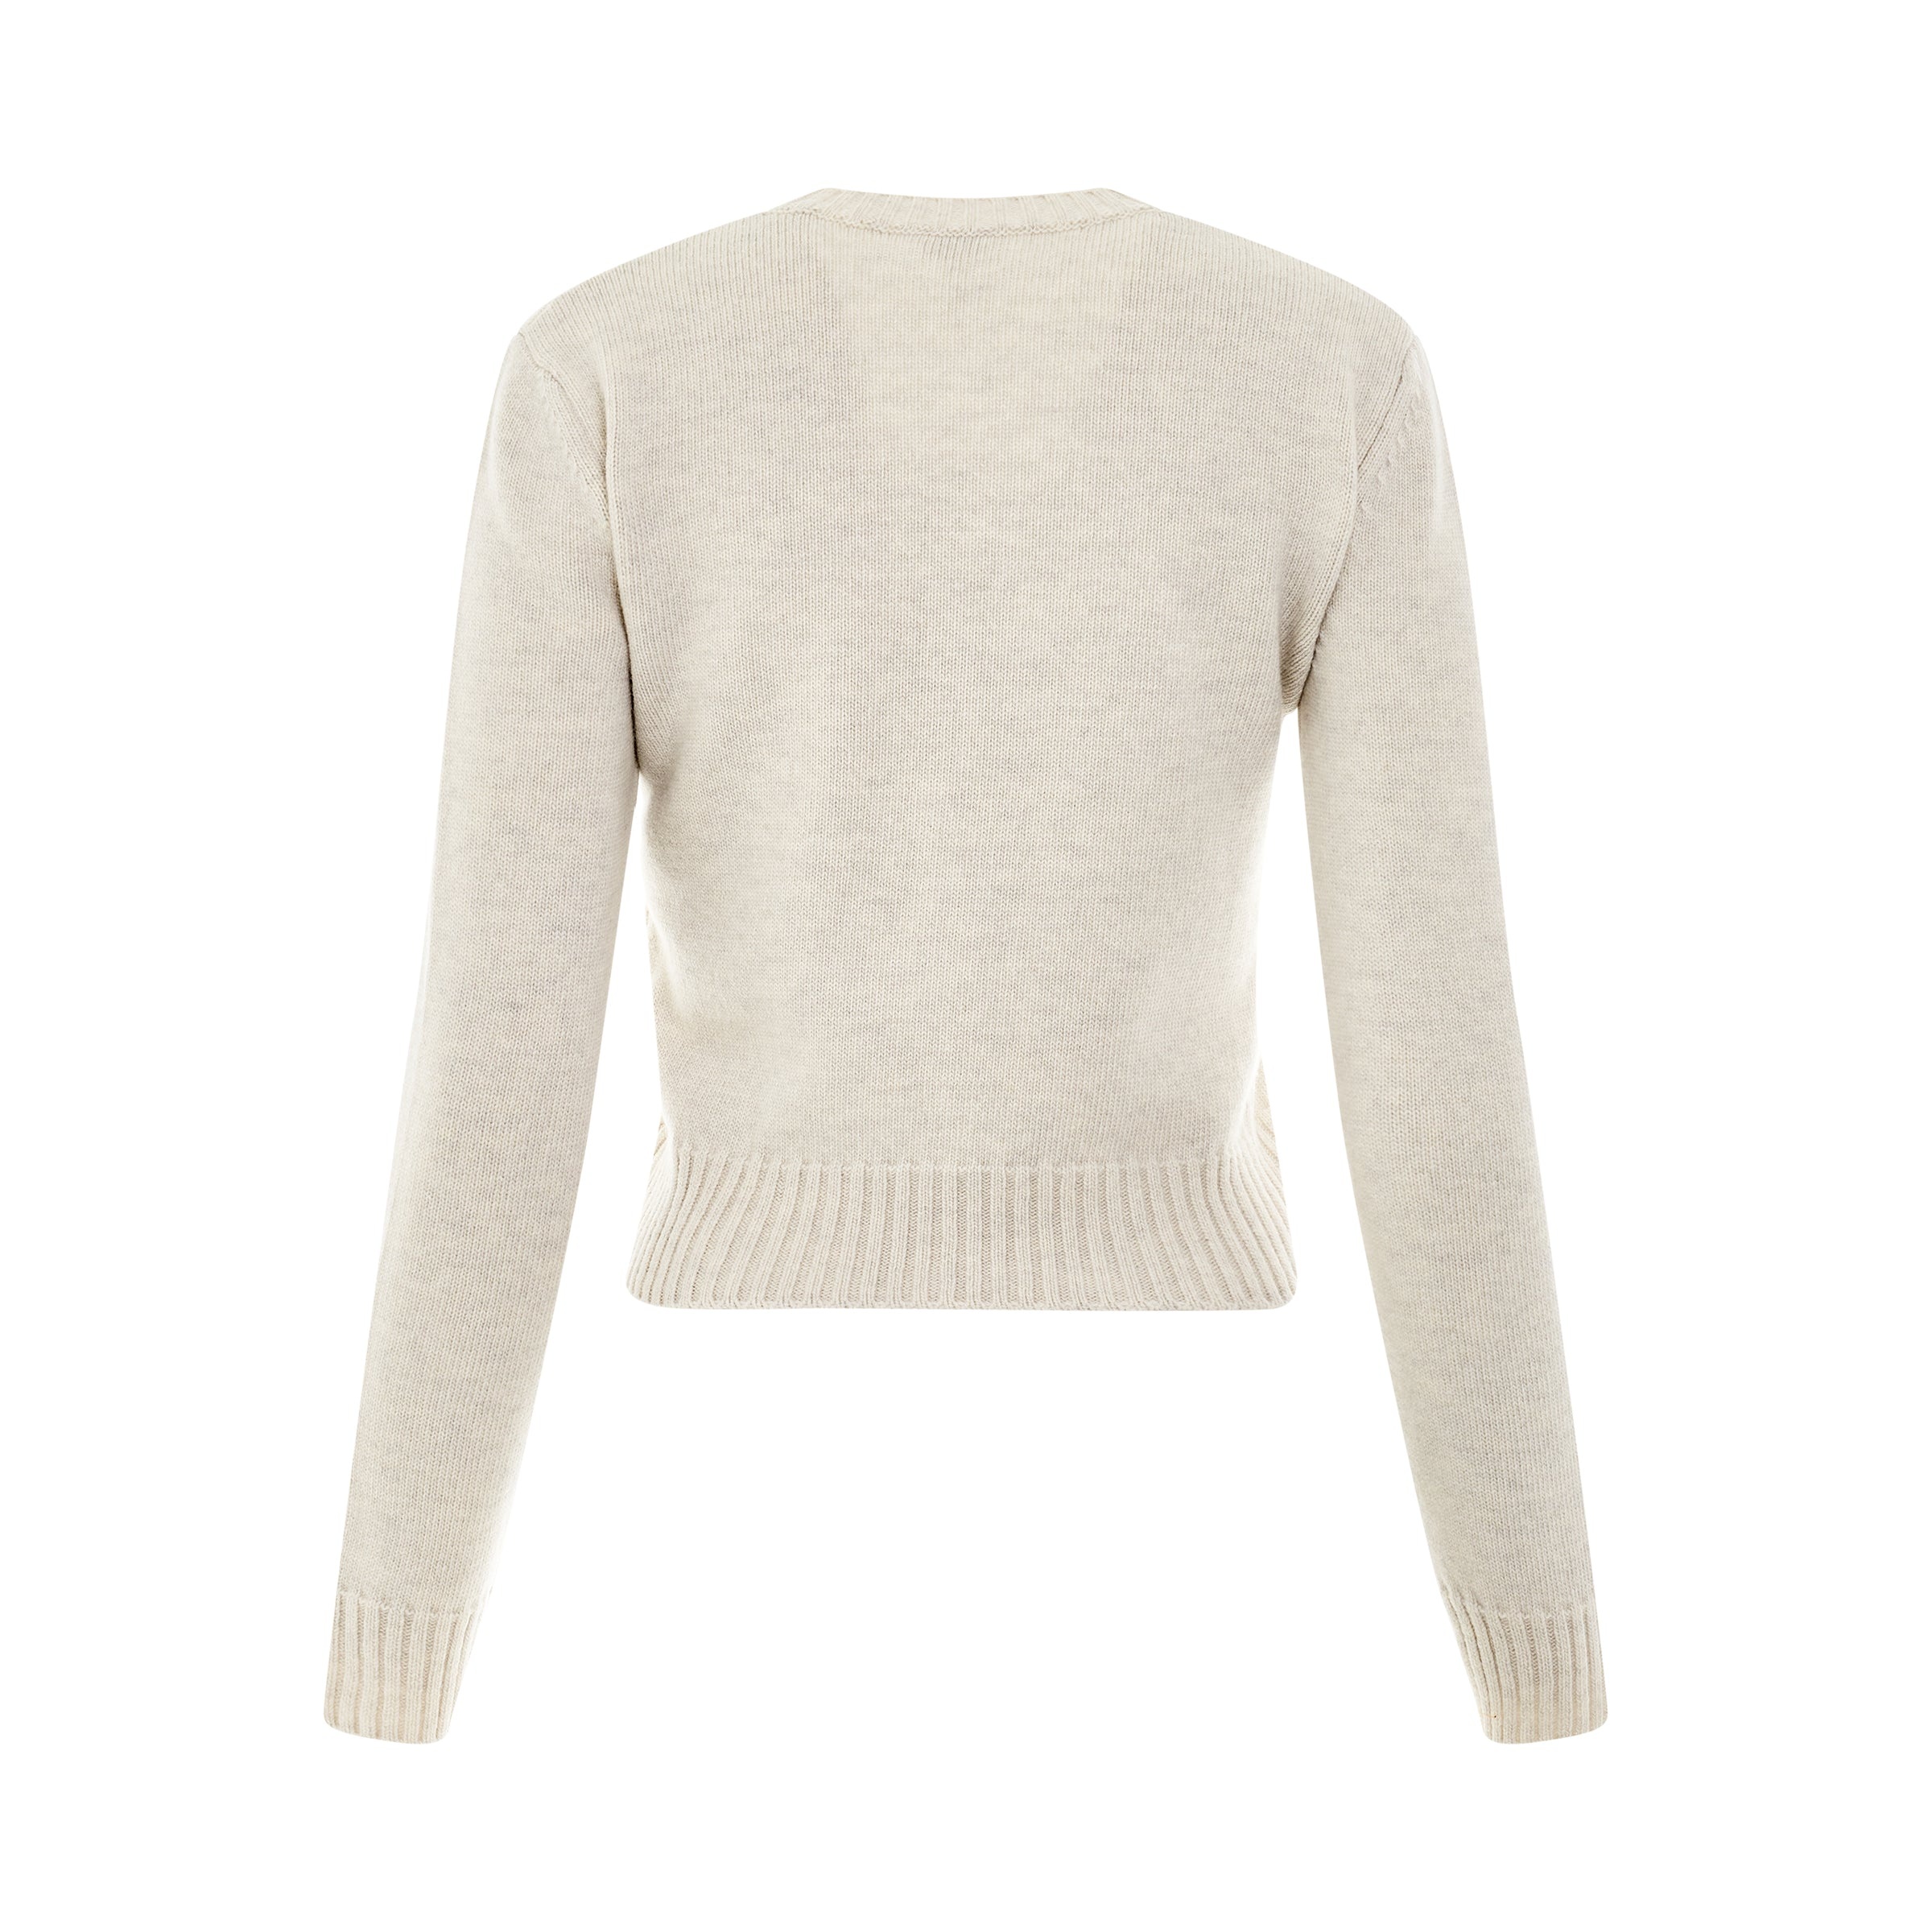 Loewe Cropped Sweater in Light Grey Melange | REVERSIBLE